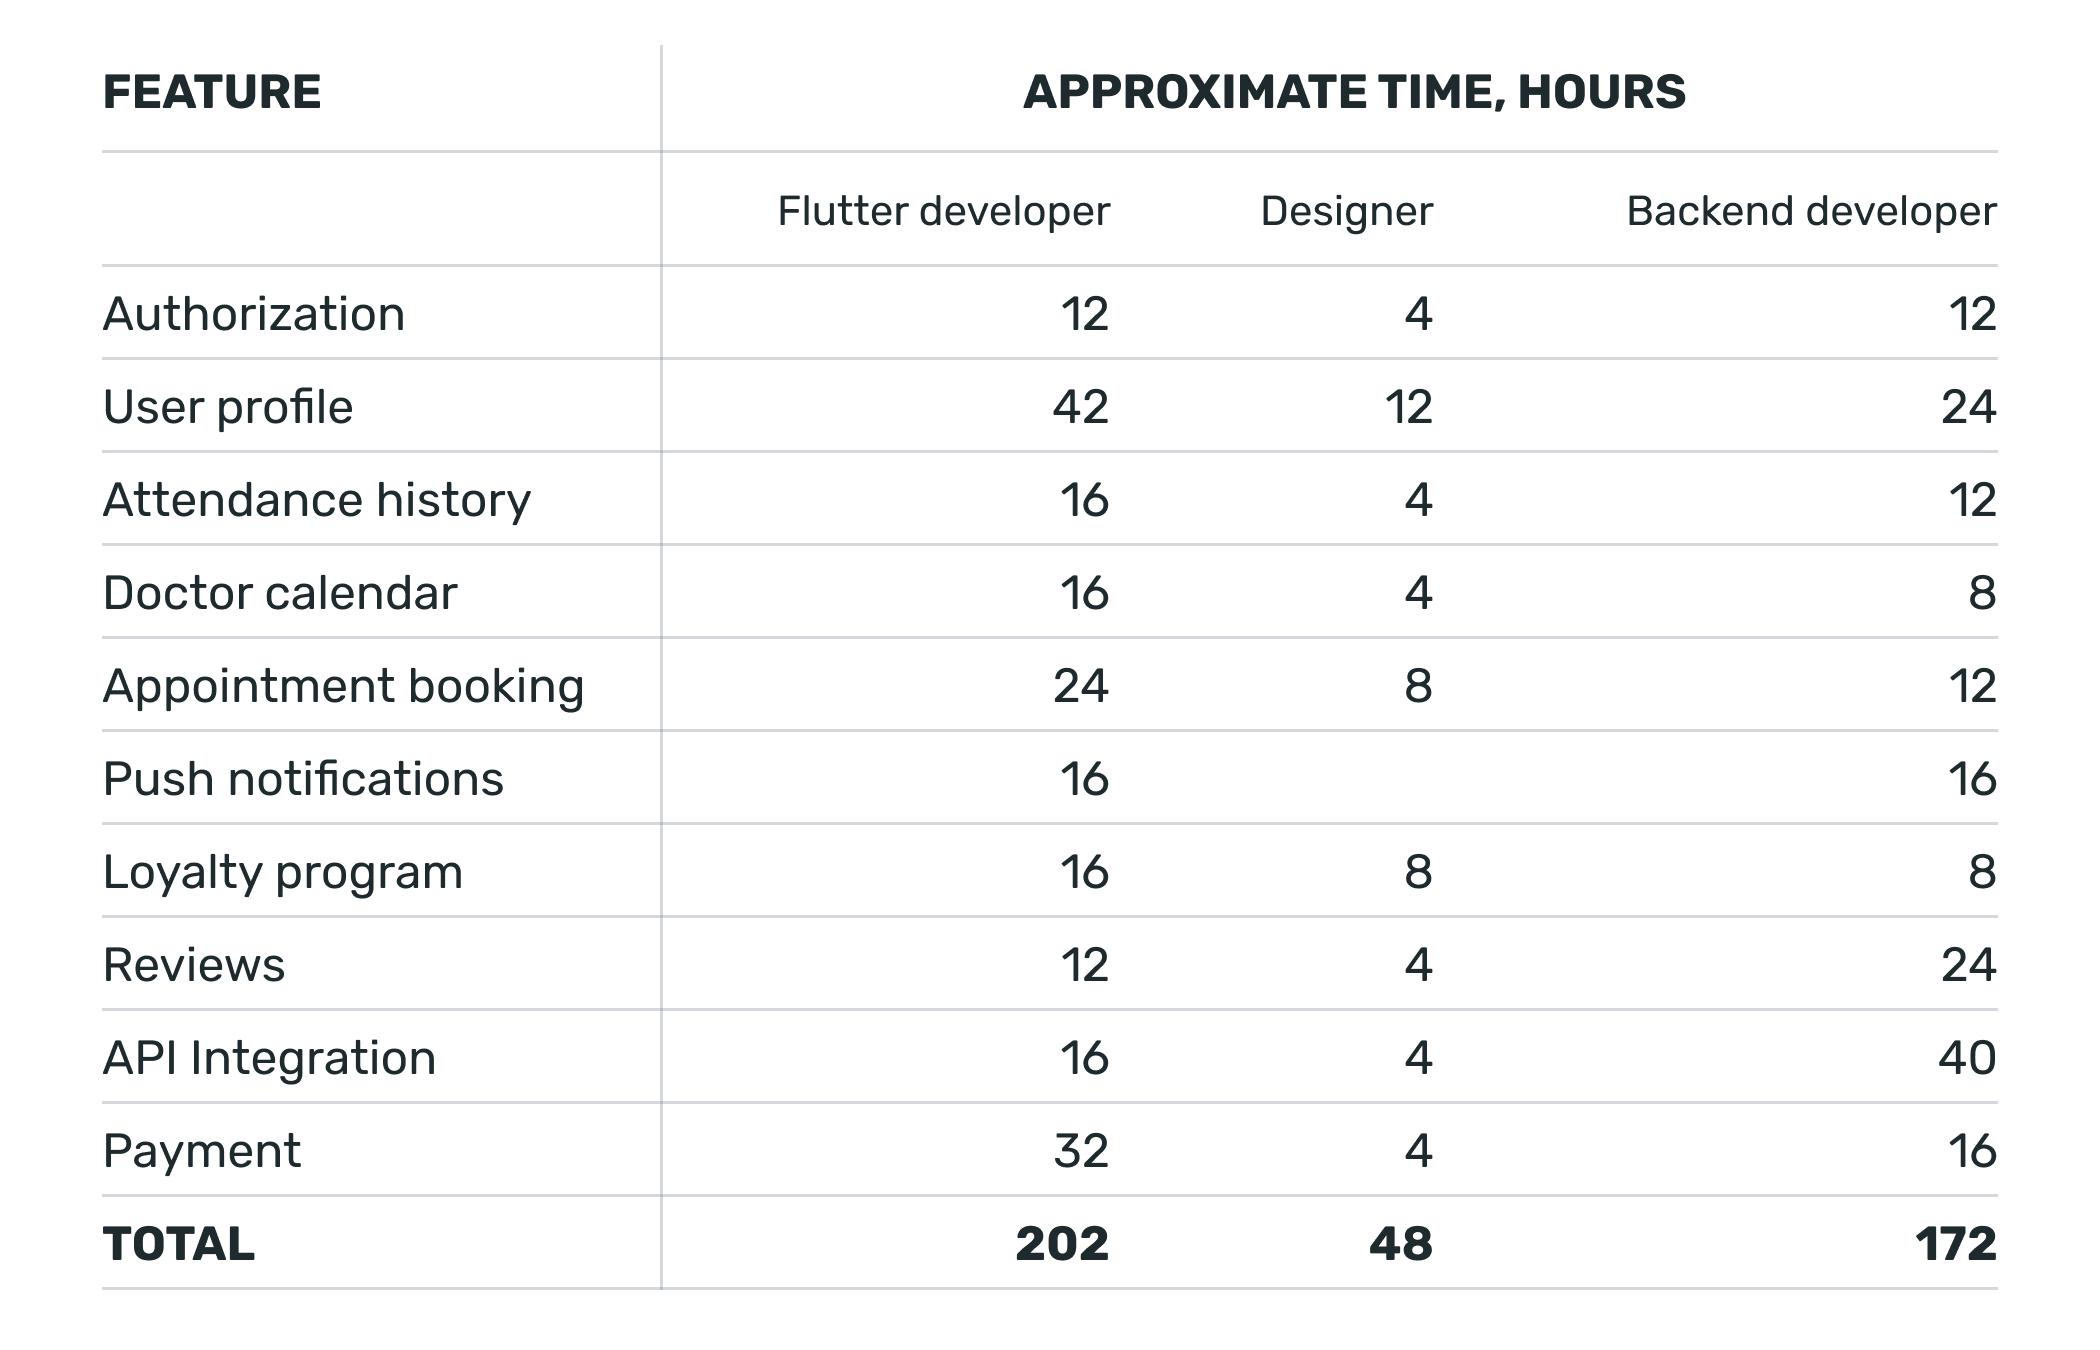 The cost of Flutter app development